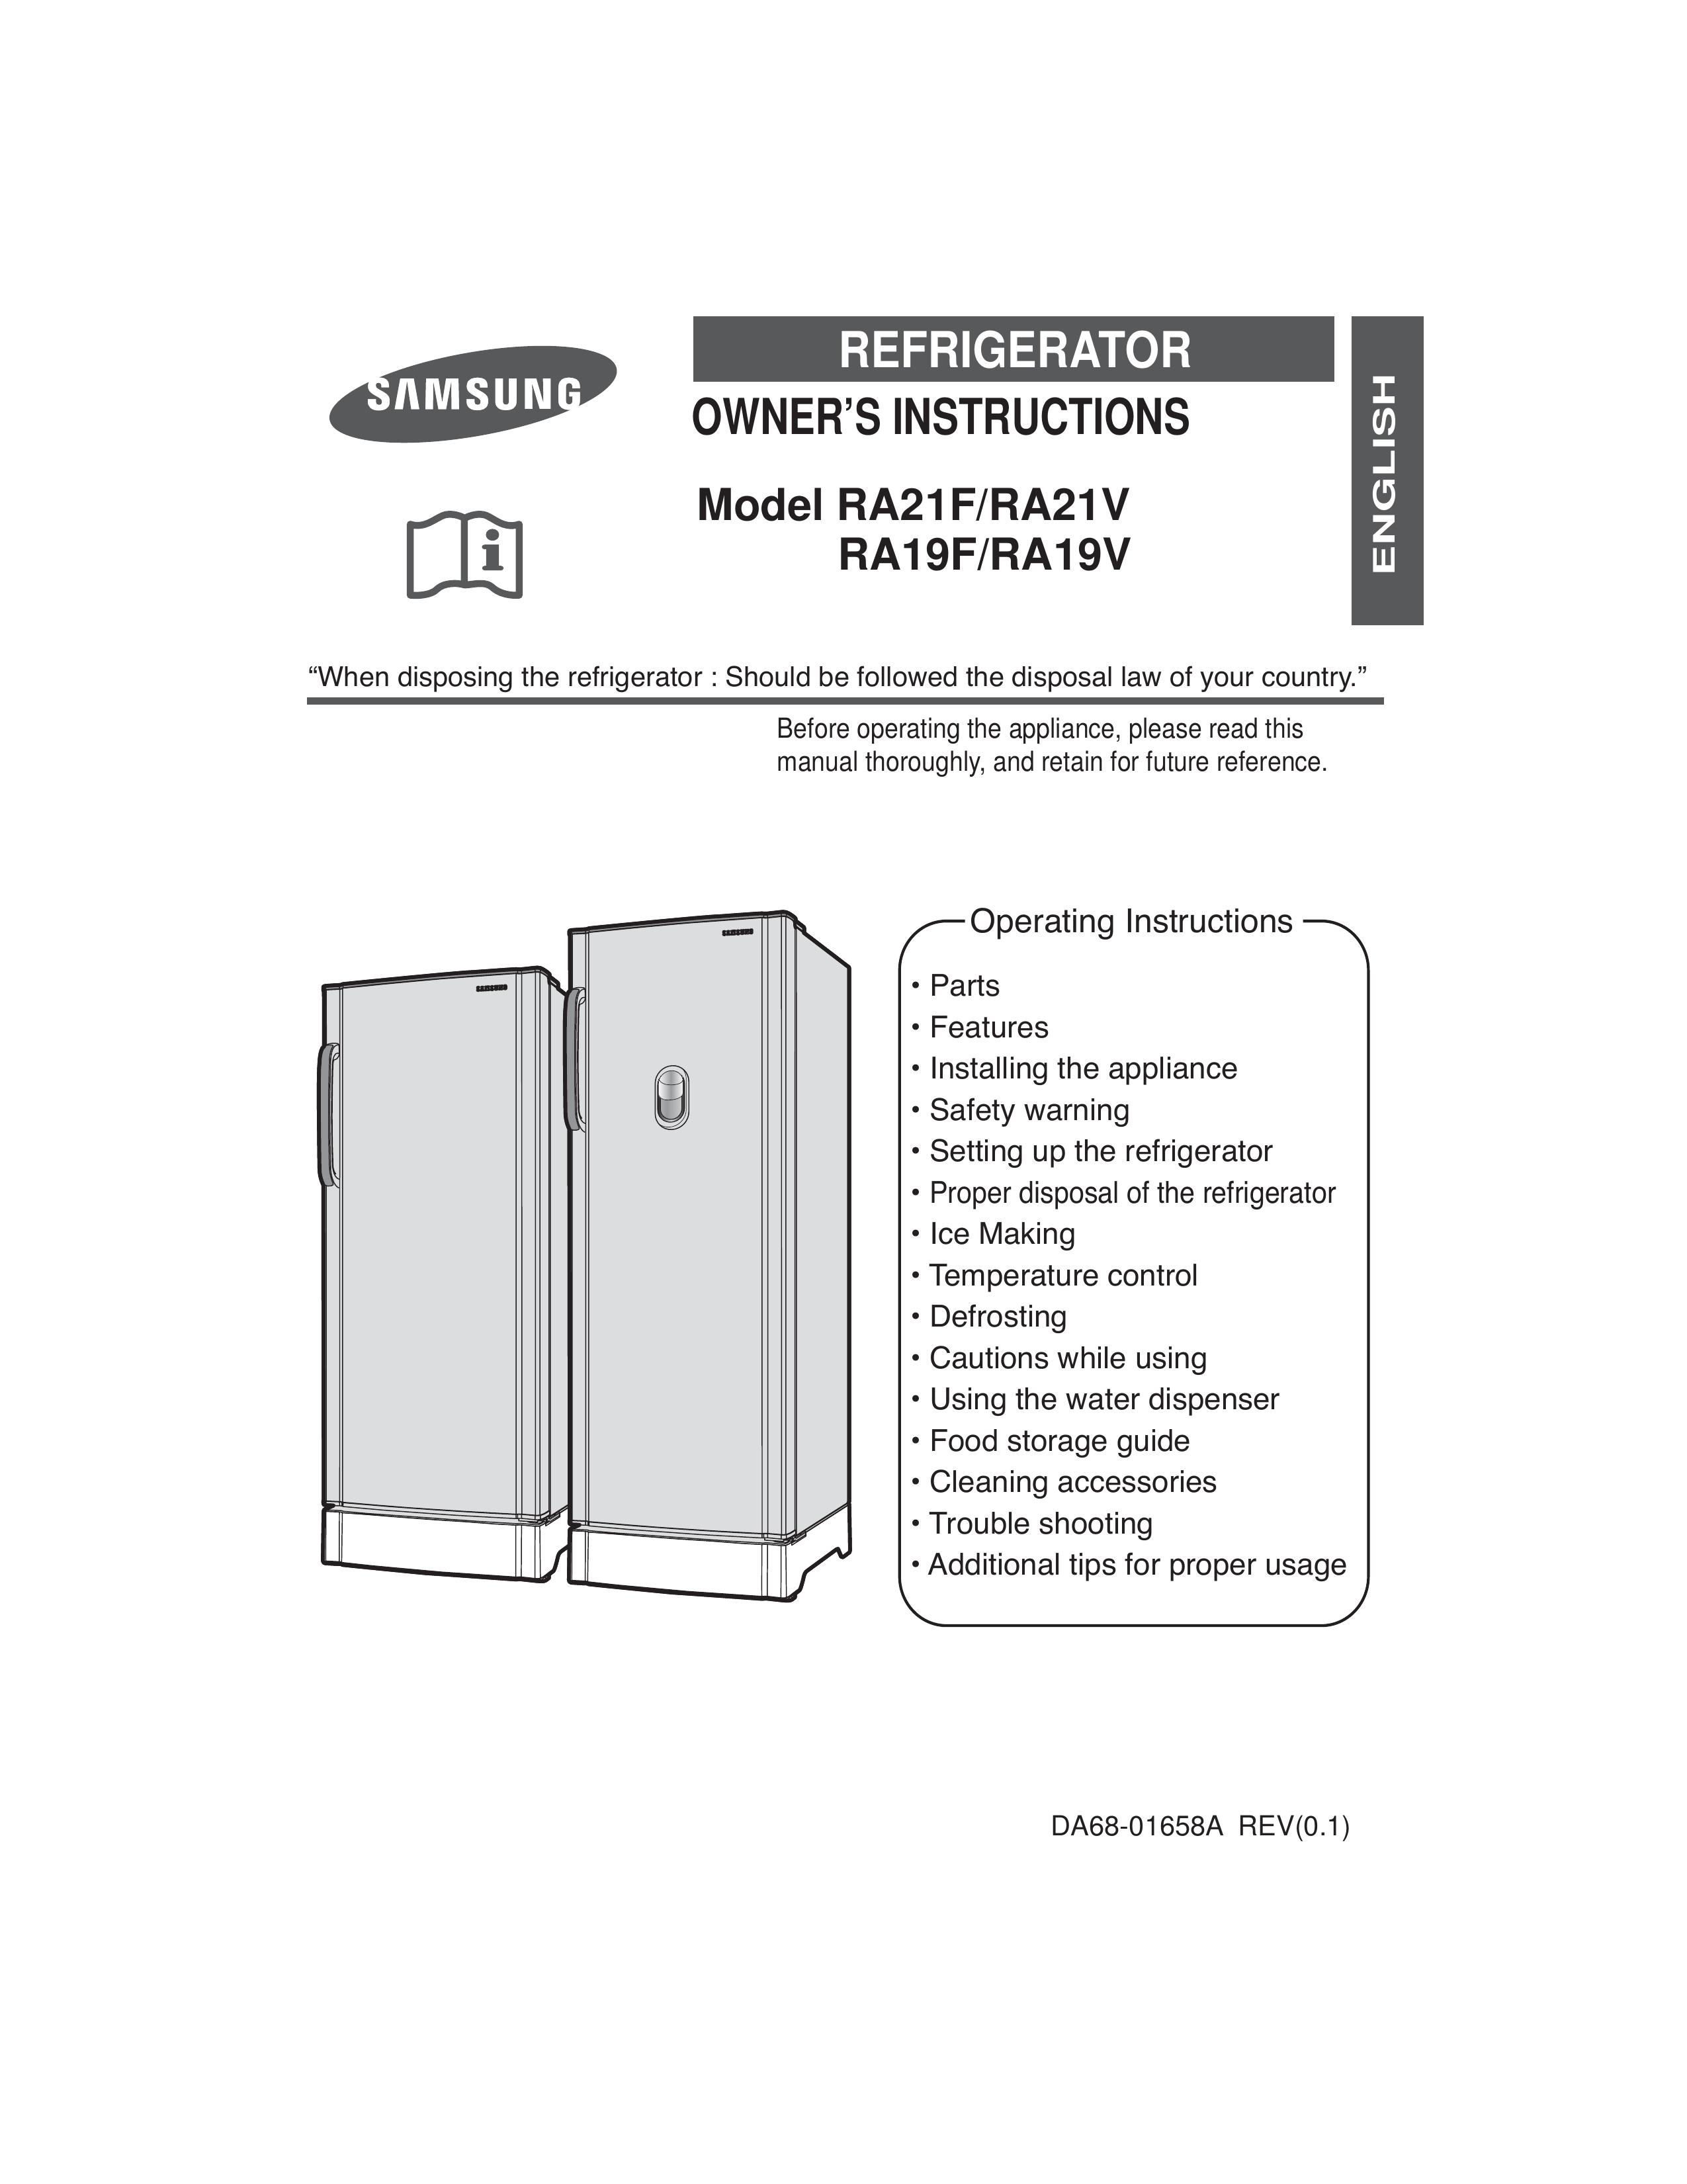 Samsung RA21F/RA21V Refrigerator User Manual